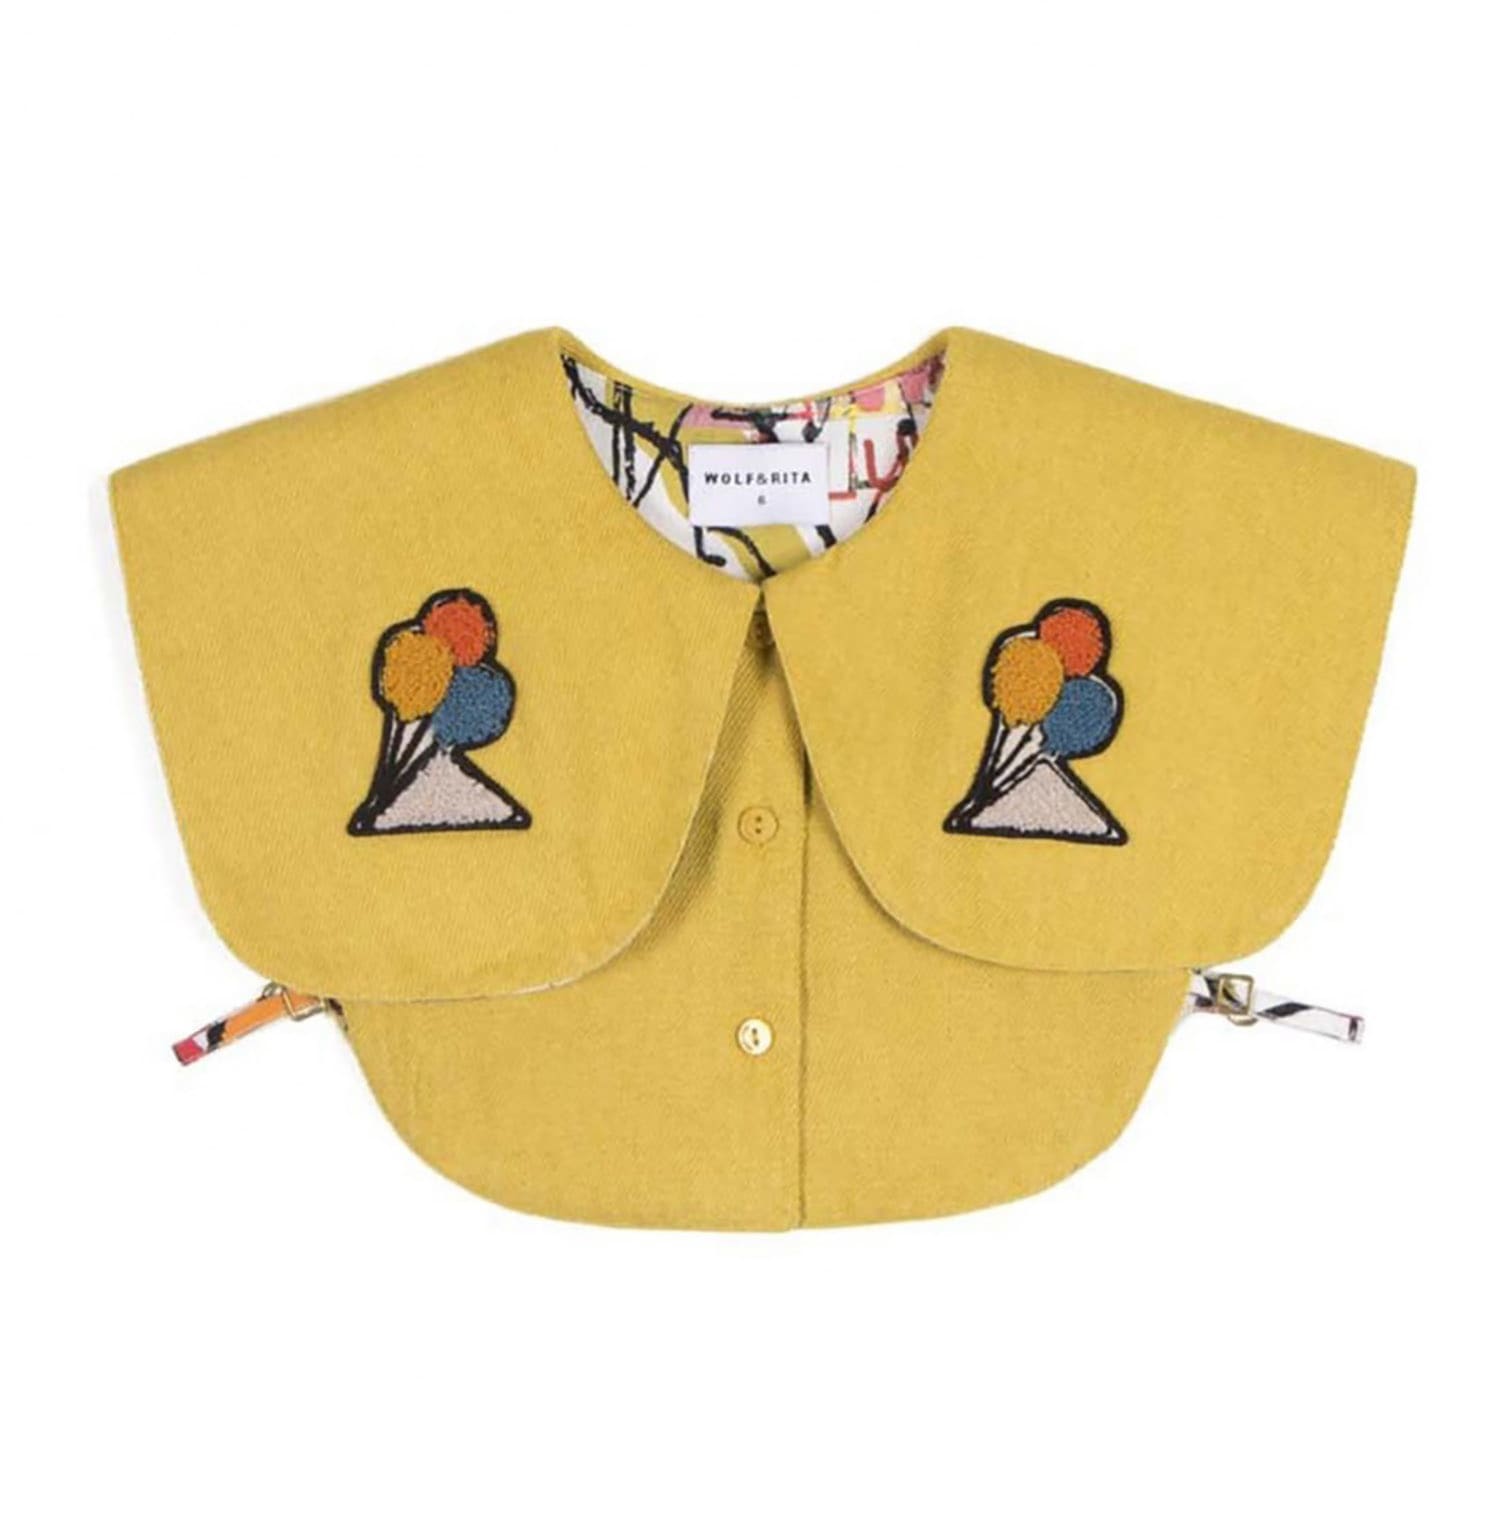 Wolf & Rita Yellow Collar For Girl